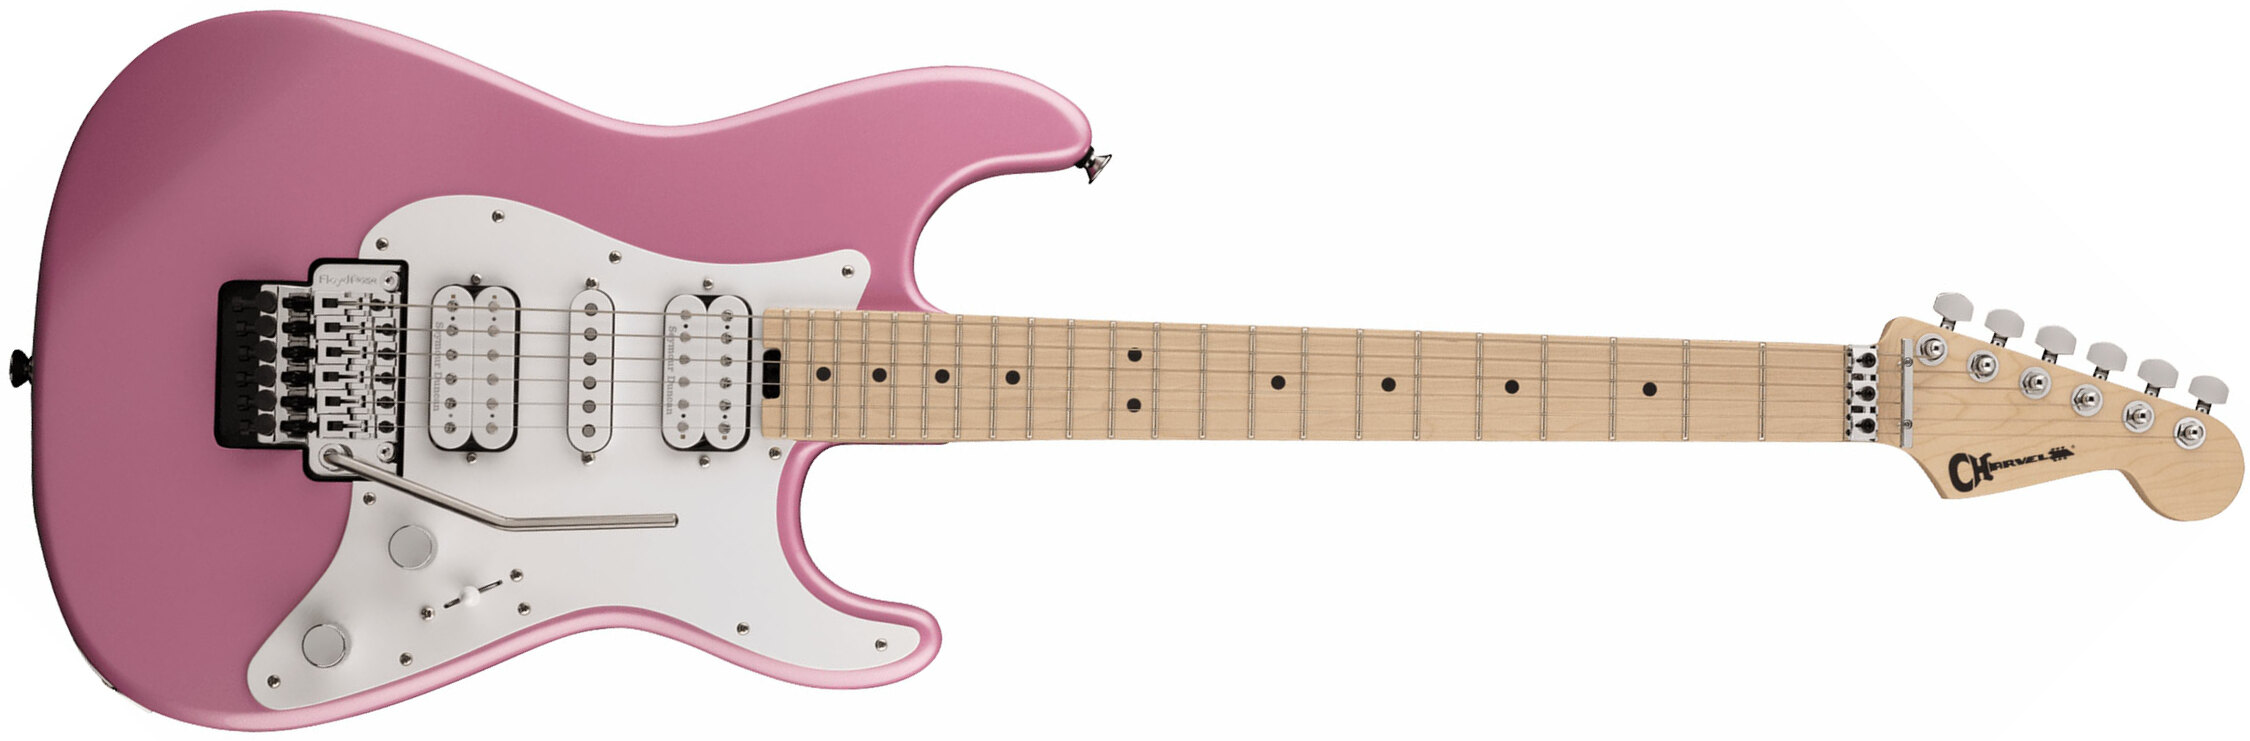 Charvel So-cal Style 1 Hsh Fr M Pro-mod Seymour Duncan Mn - Platinum Pink - Str shape electric guitar - Main picture